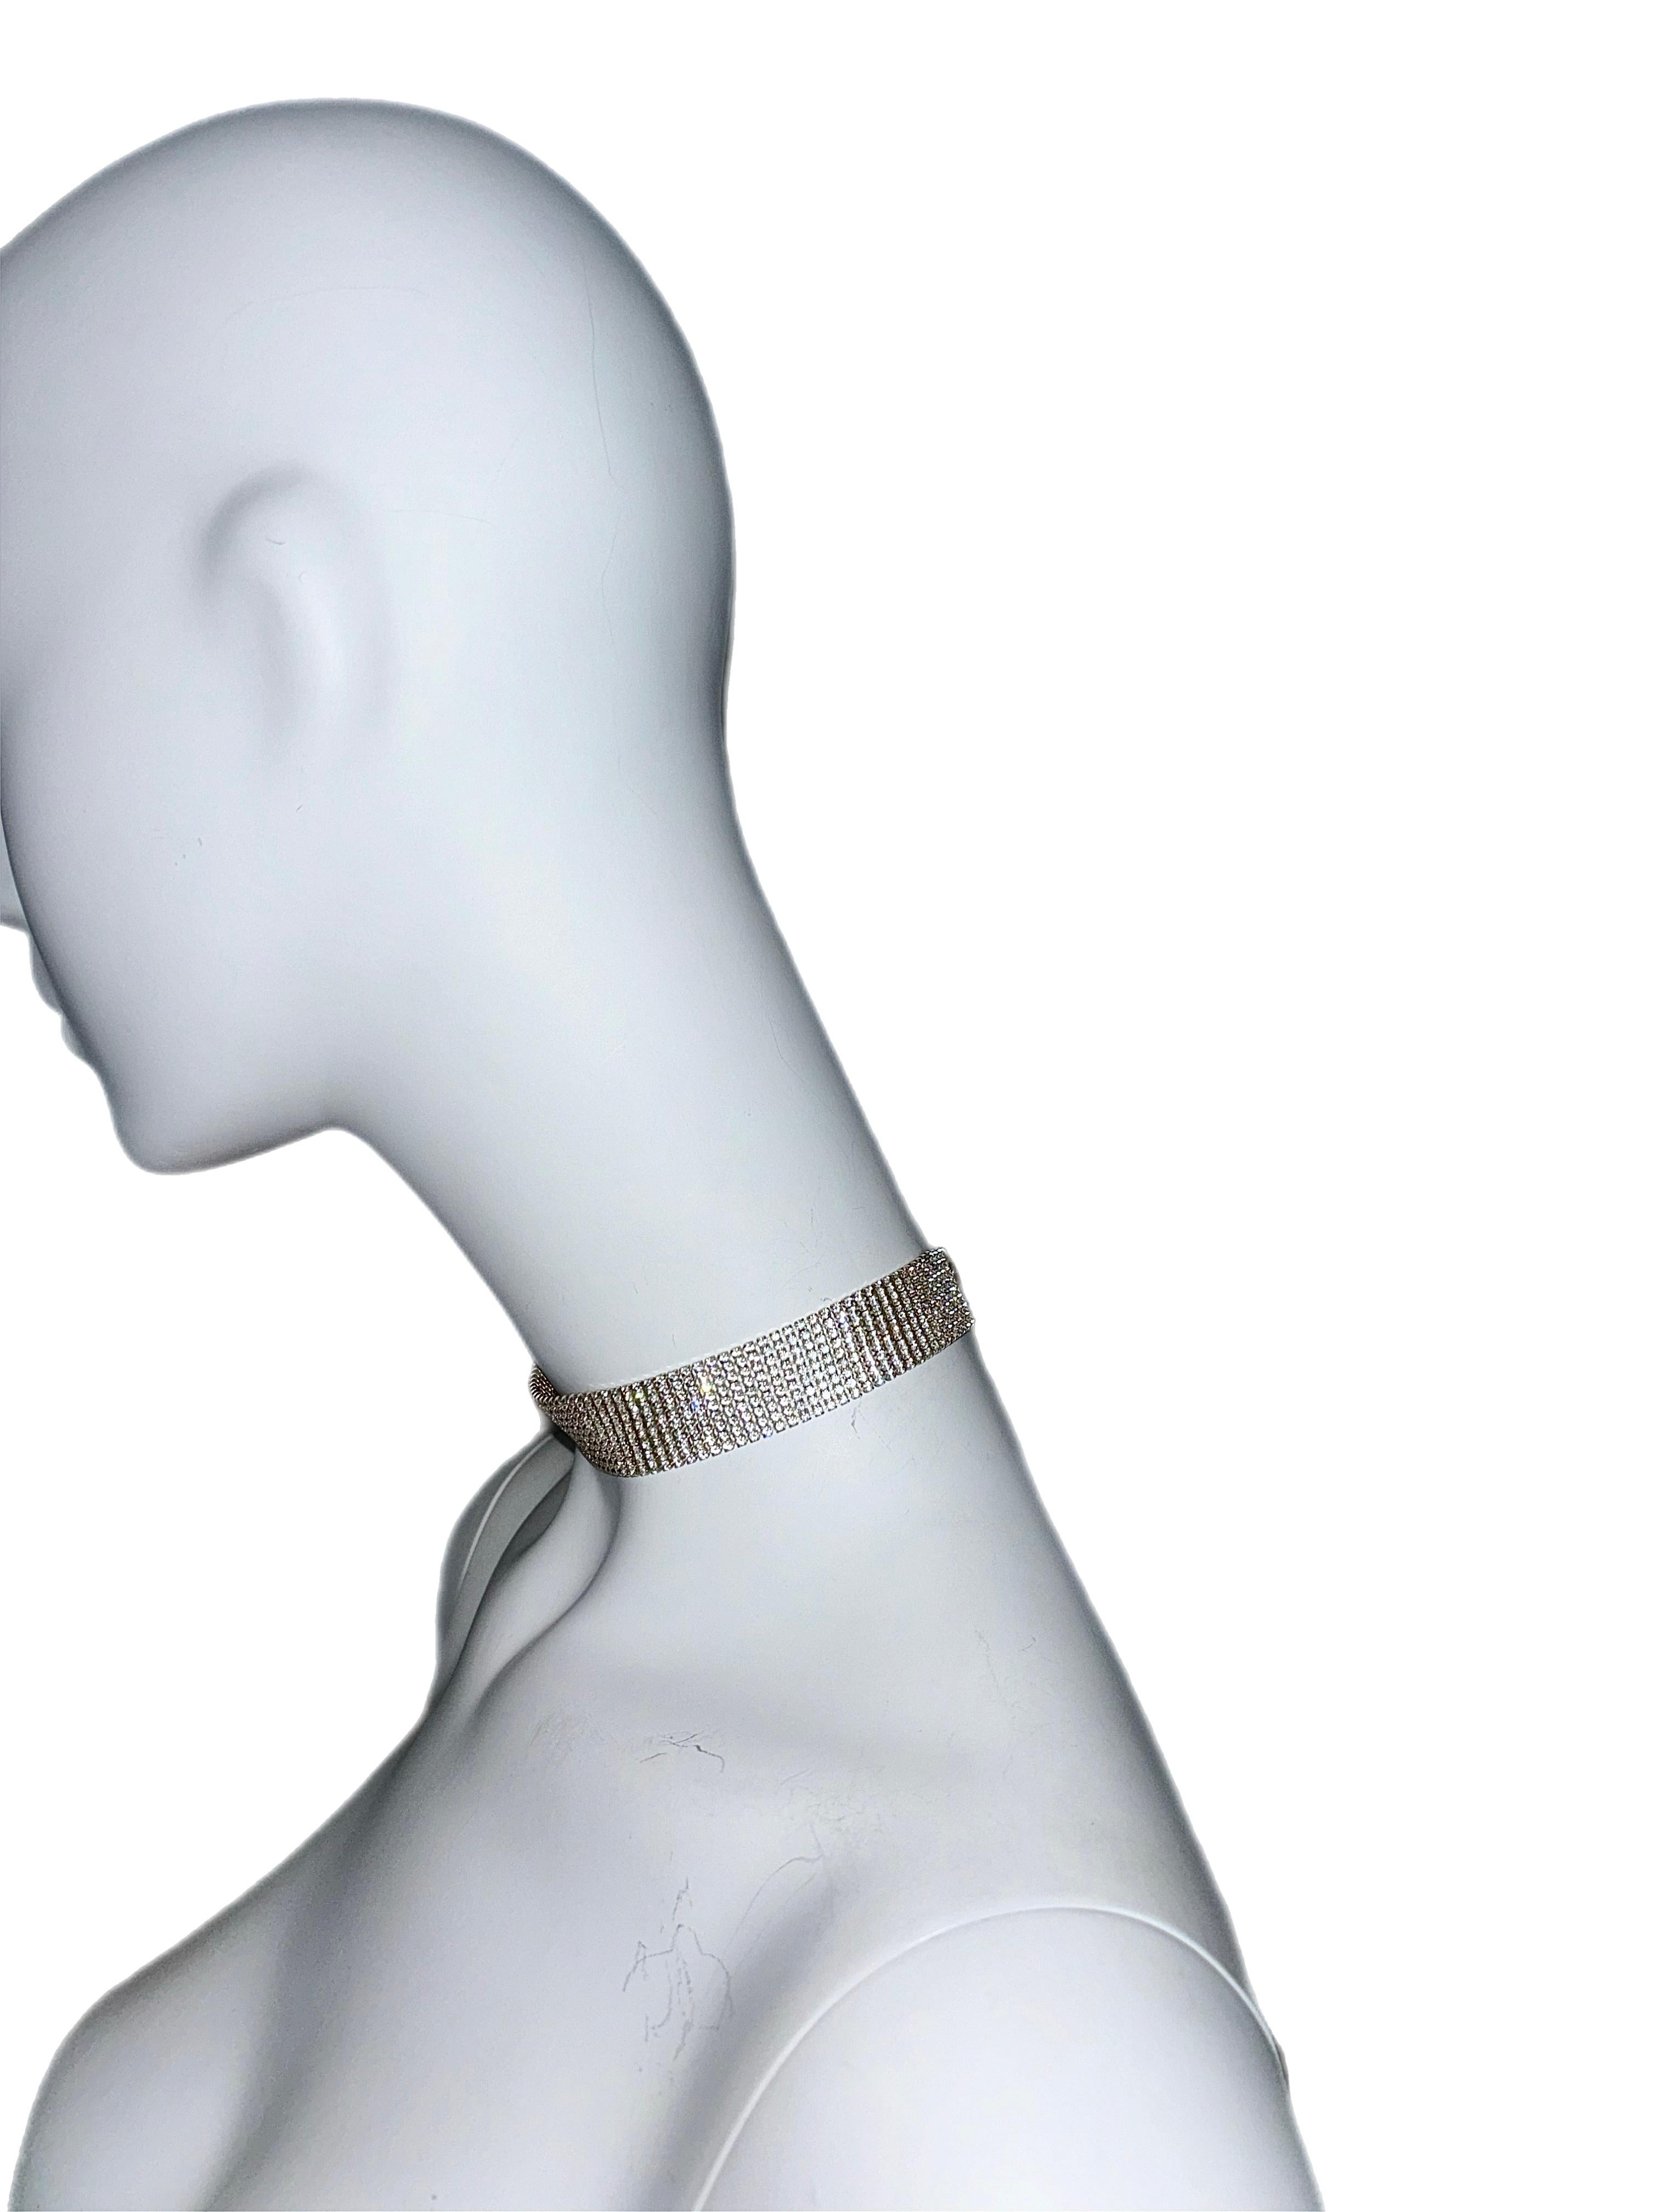 RALPH LAUREN COLLECTION vintage Swarovski crystal silver choker necklace In Excellent Condition For Sale In Leonardo, NJ